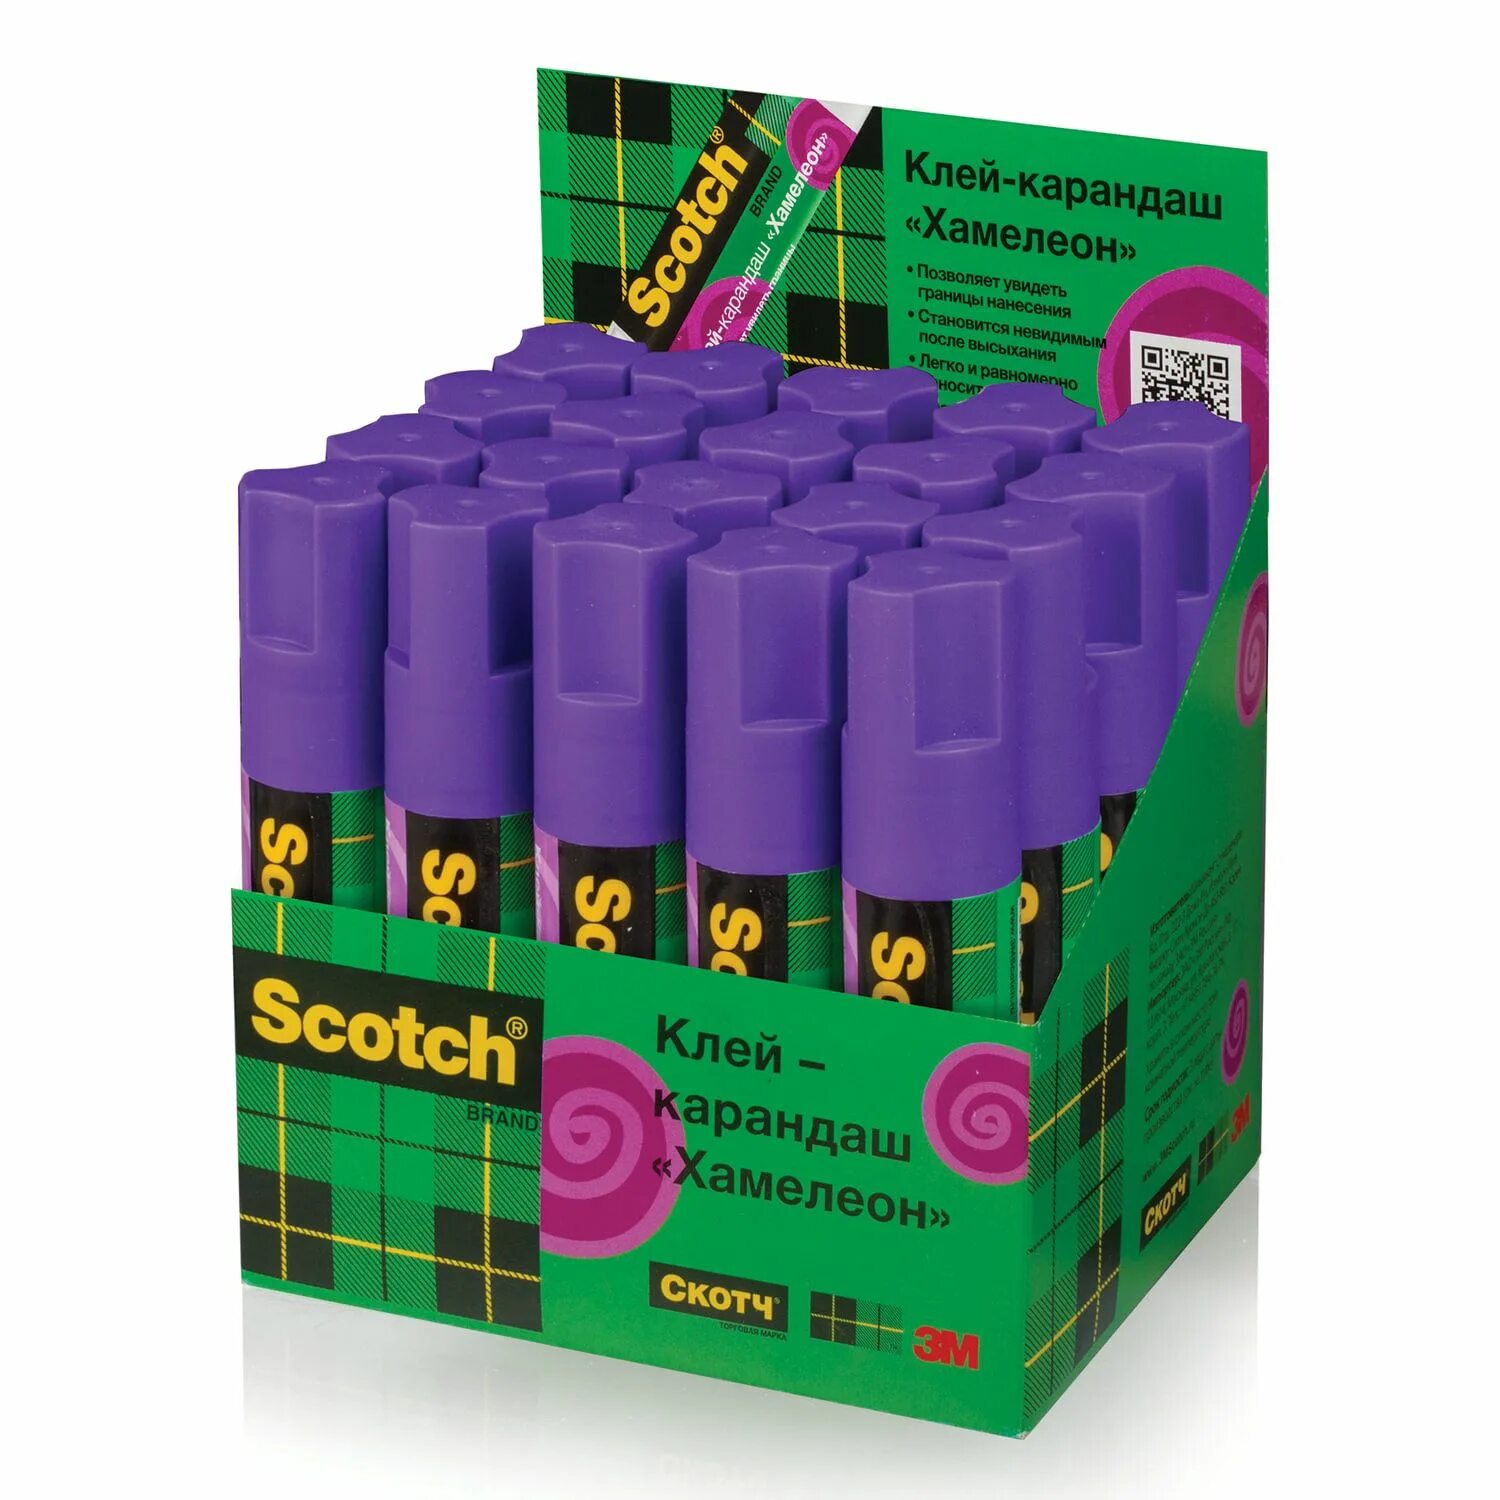 Клей-карандаш Scotch, 15 г. Scotch клей карандаш. Клей-карандаш 3m 6115d20 Scotch хамелеон 7100025018 15гр фиолетовый - 20 шт. Клей карандаш хамелеон. Хамелеон 15